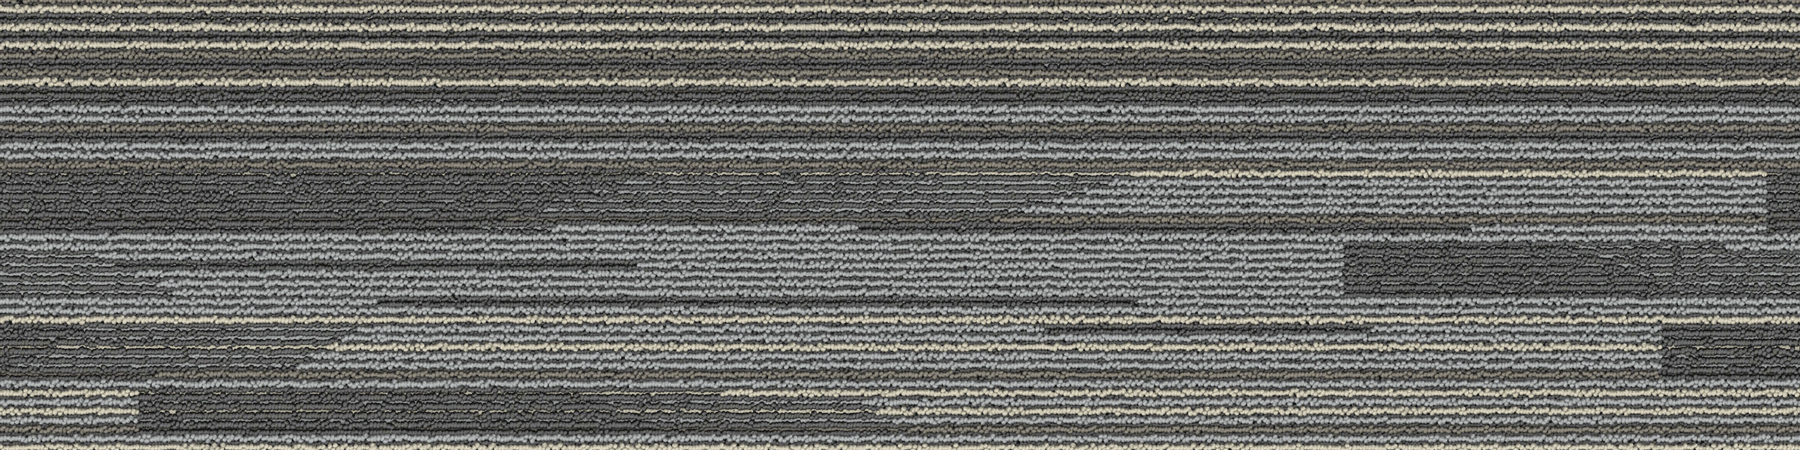 Standard Carpets (BUBAPLK772) product